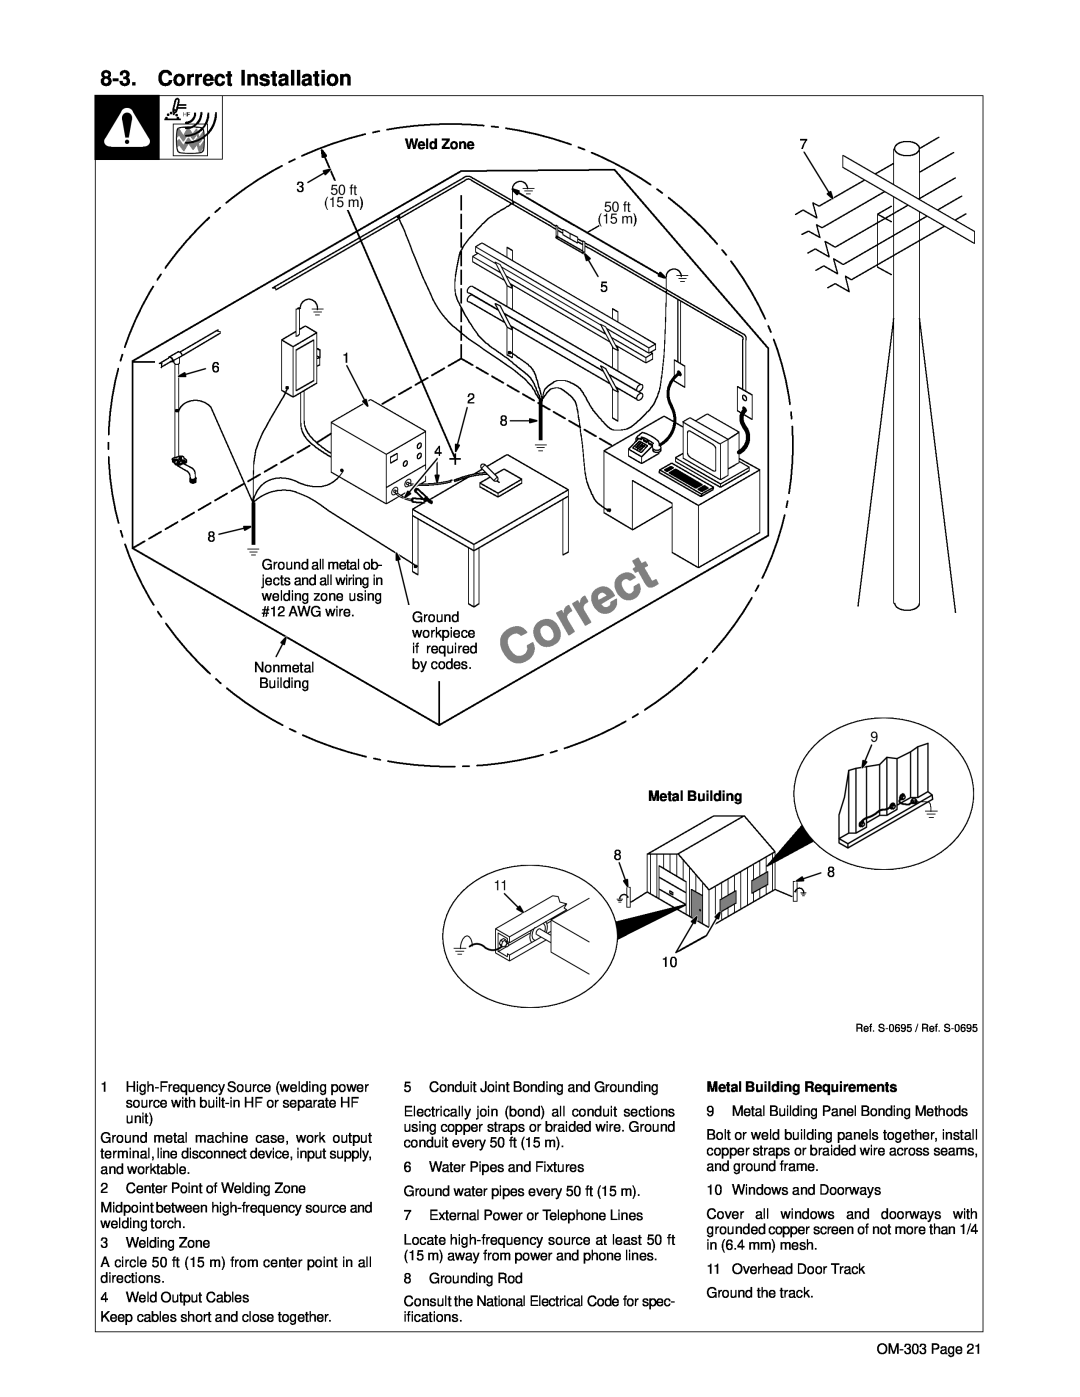 Hobart OM-303 manual Correct Installation, 50 ft 